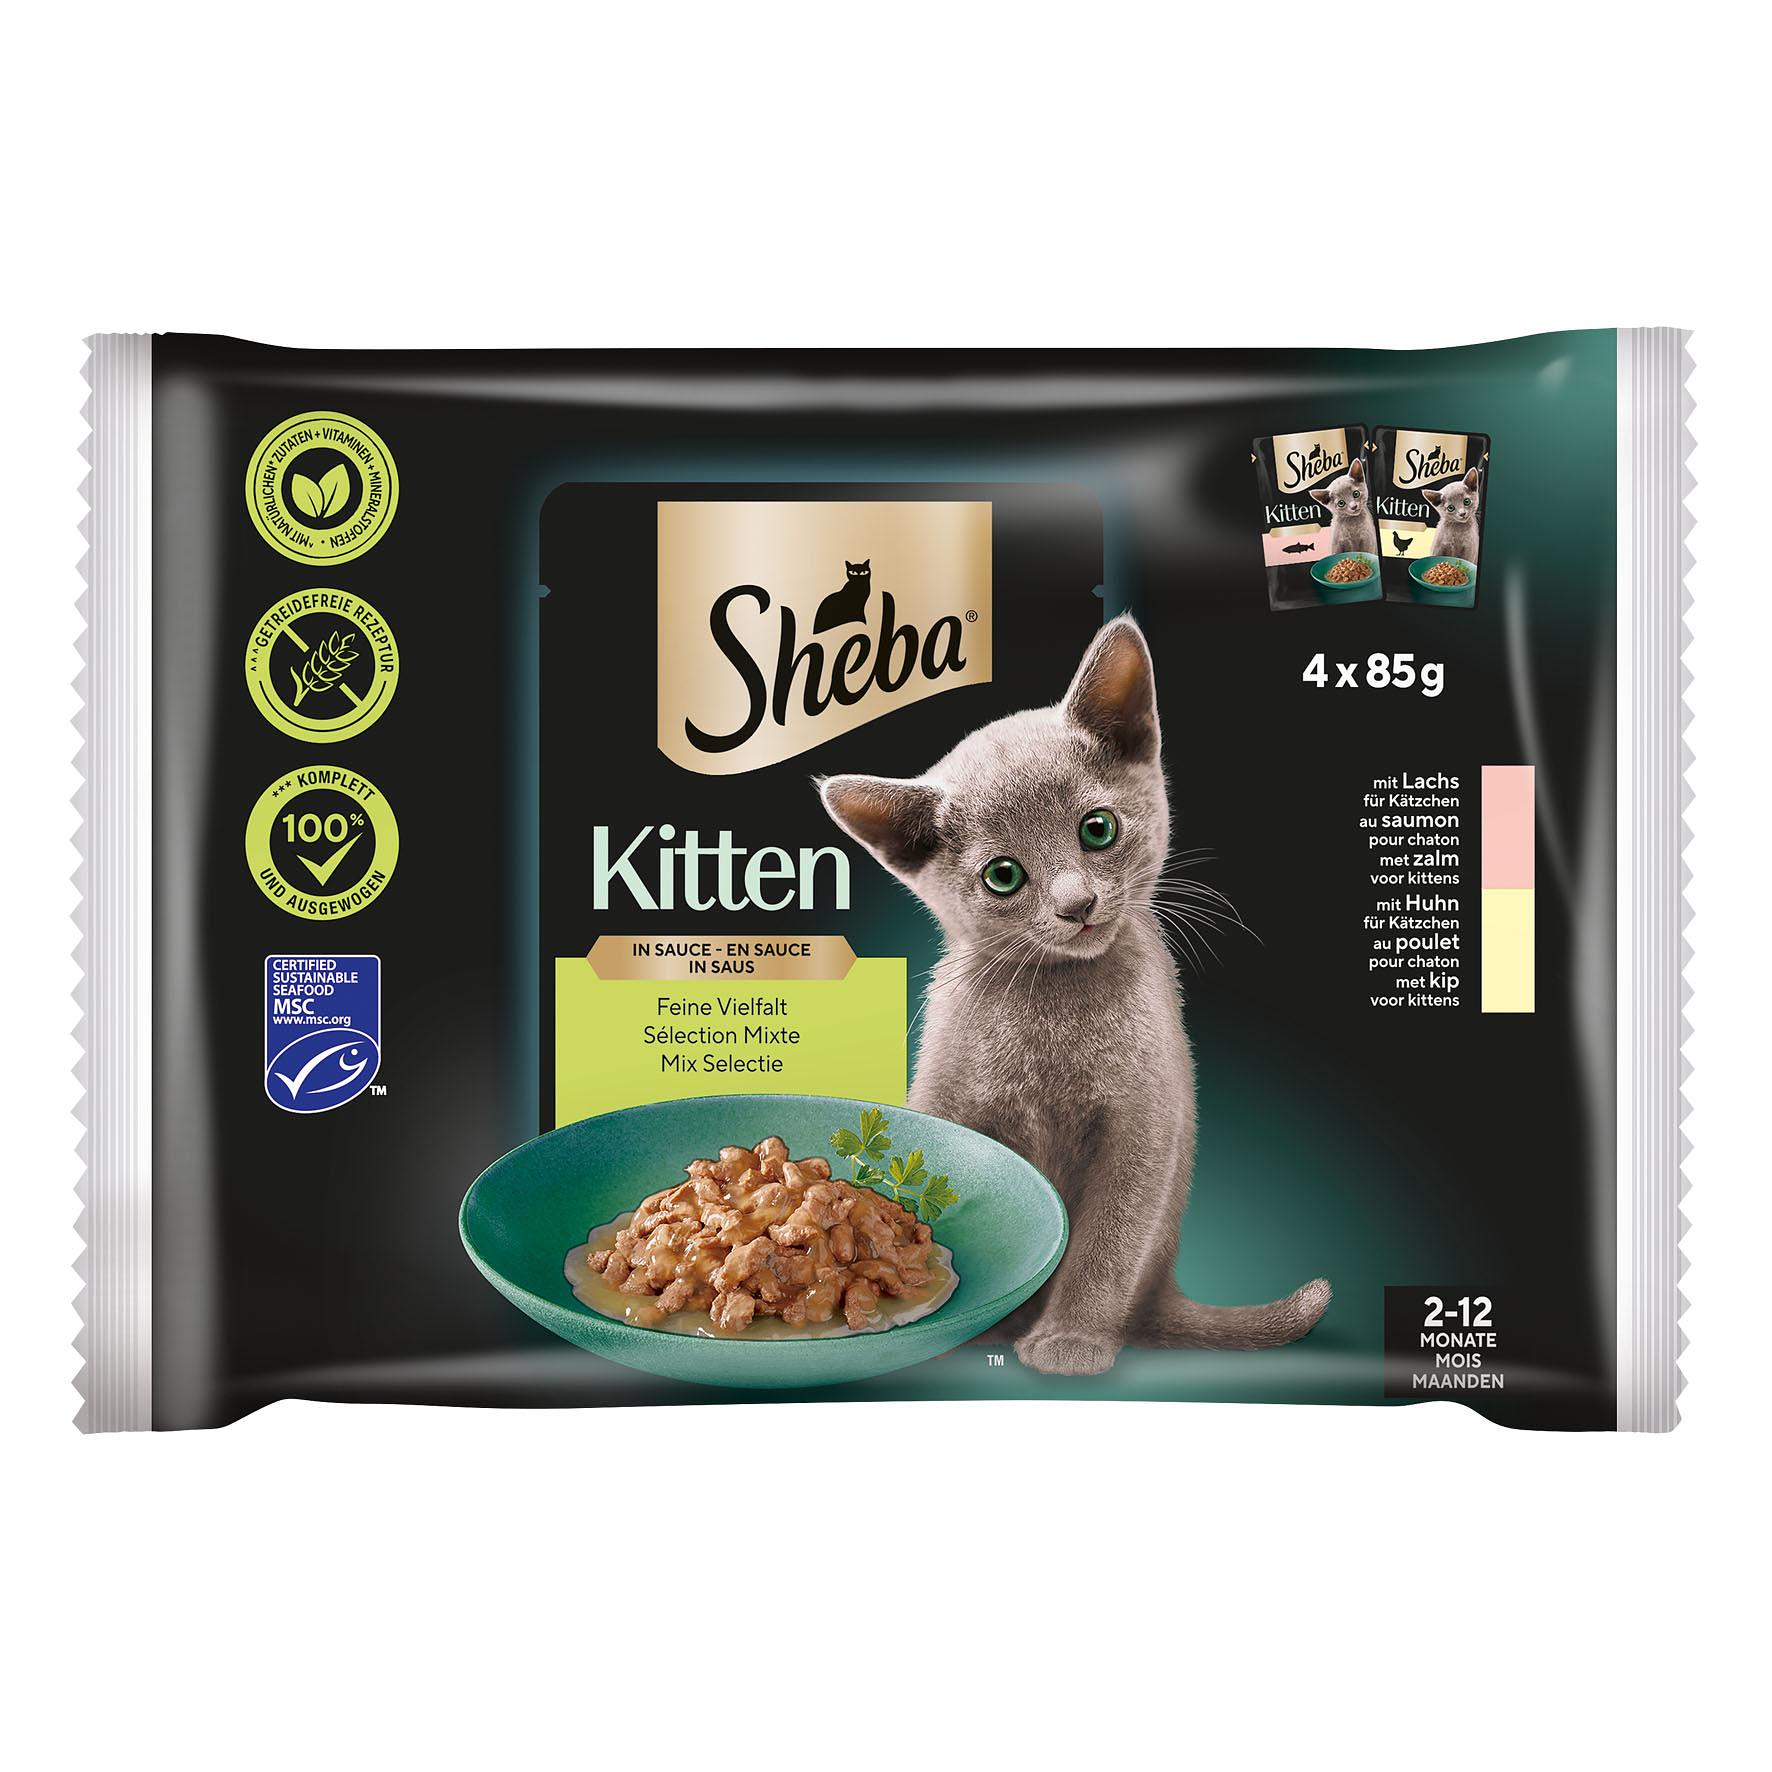 Sheba Kitten Sauce feine Vielfalt, 4x85g